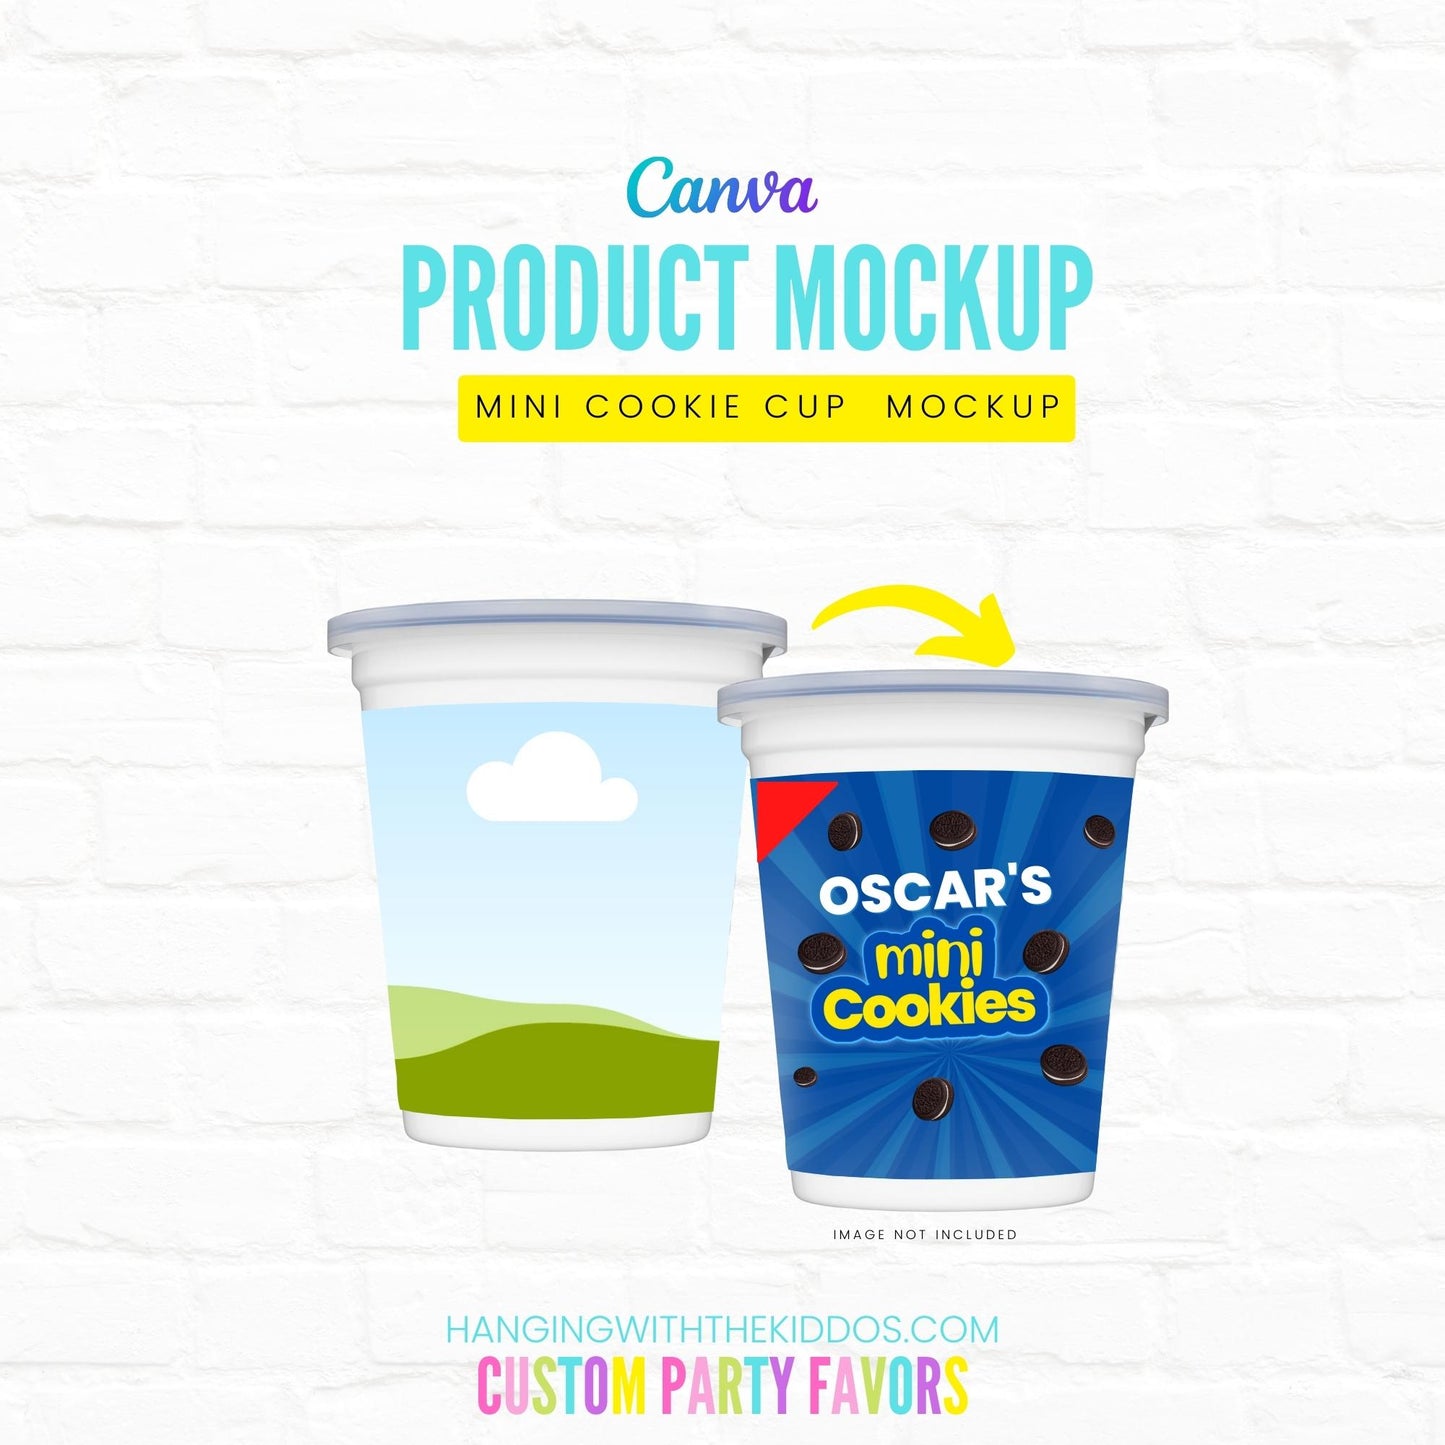 Mini COOKIE CUP Mockup|Canva Template